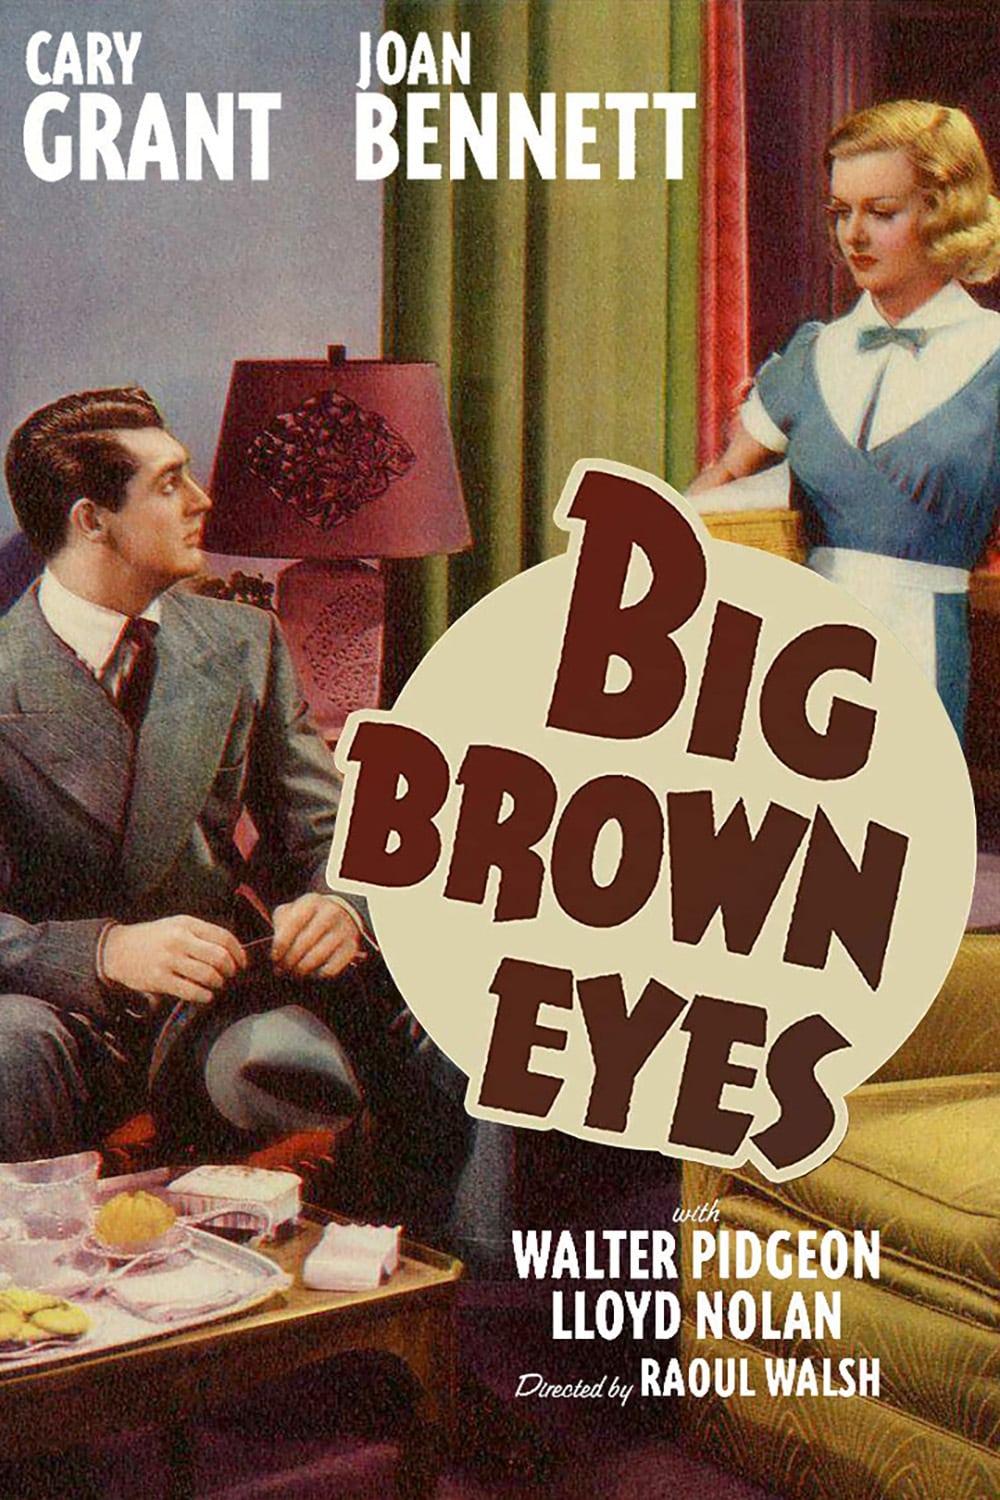 Big Brown Eyes poster